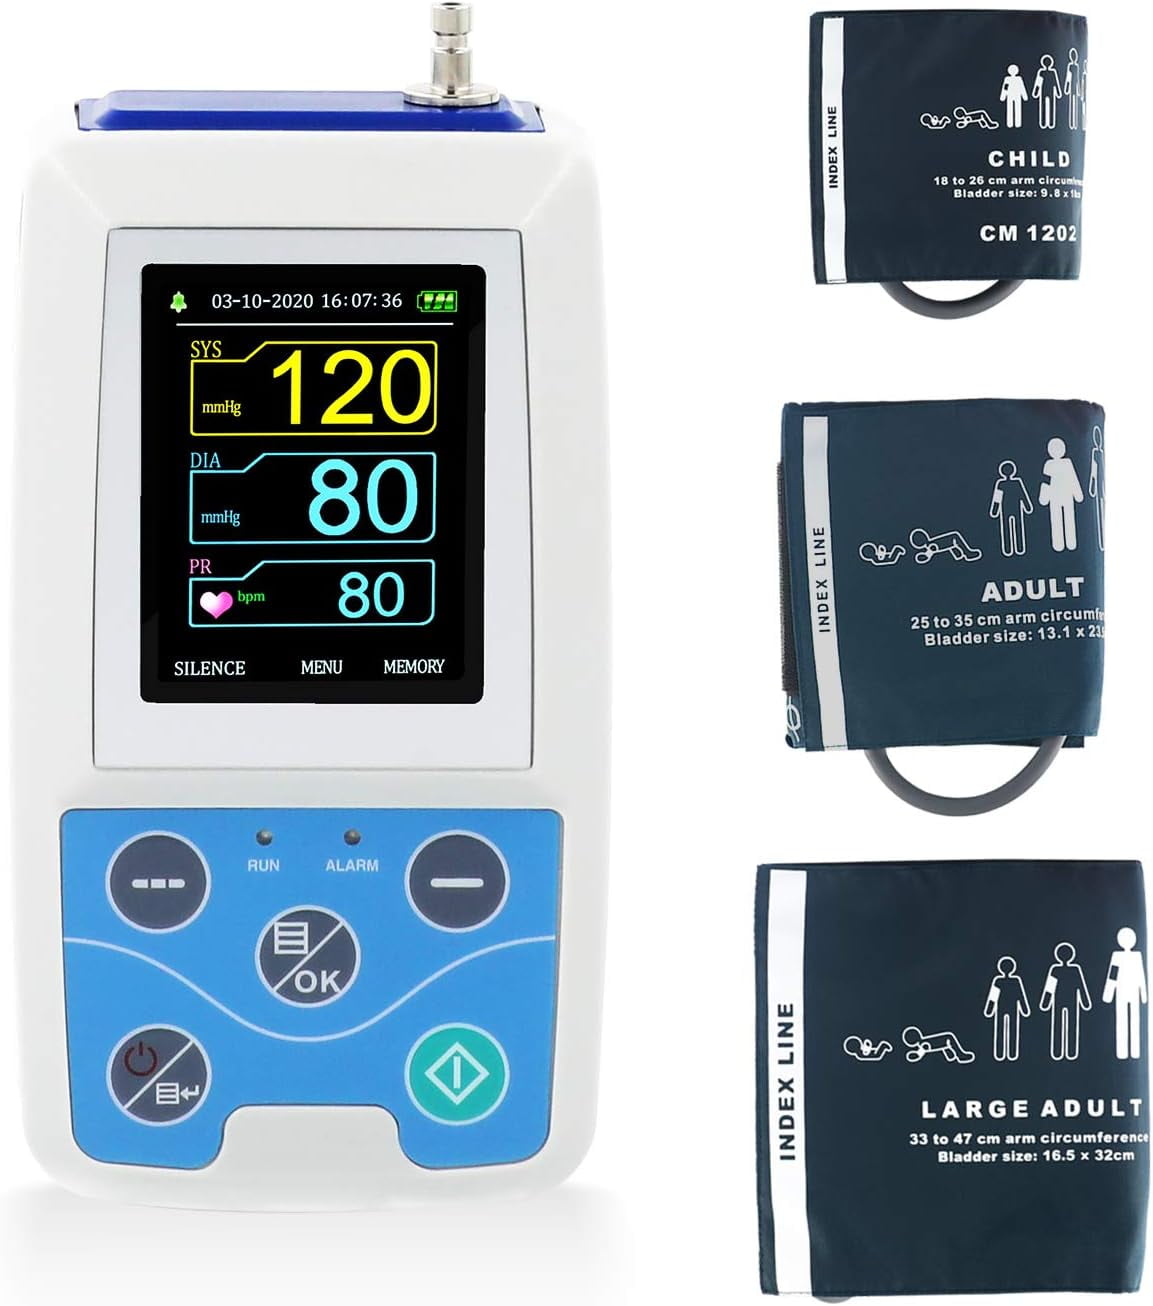 The Importance of Ambulatory Blood Pressure Monitoring - Blog